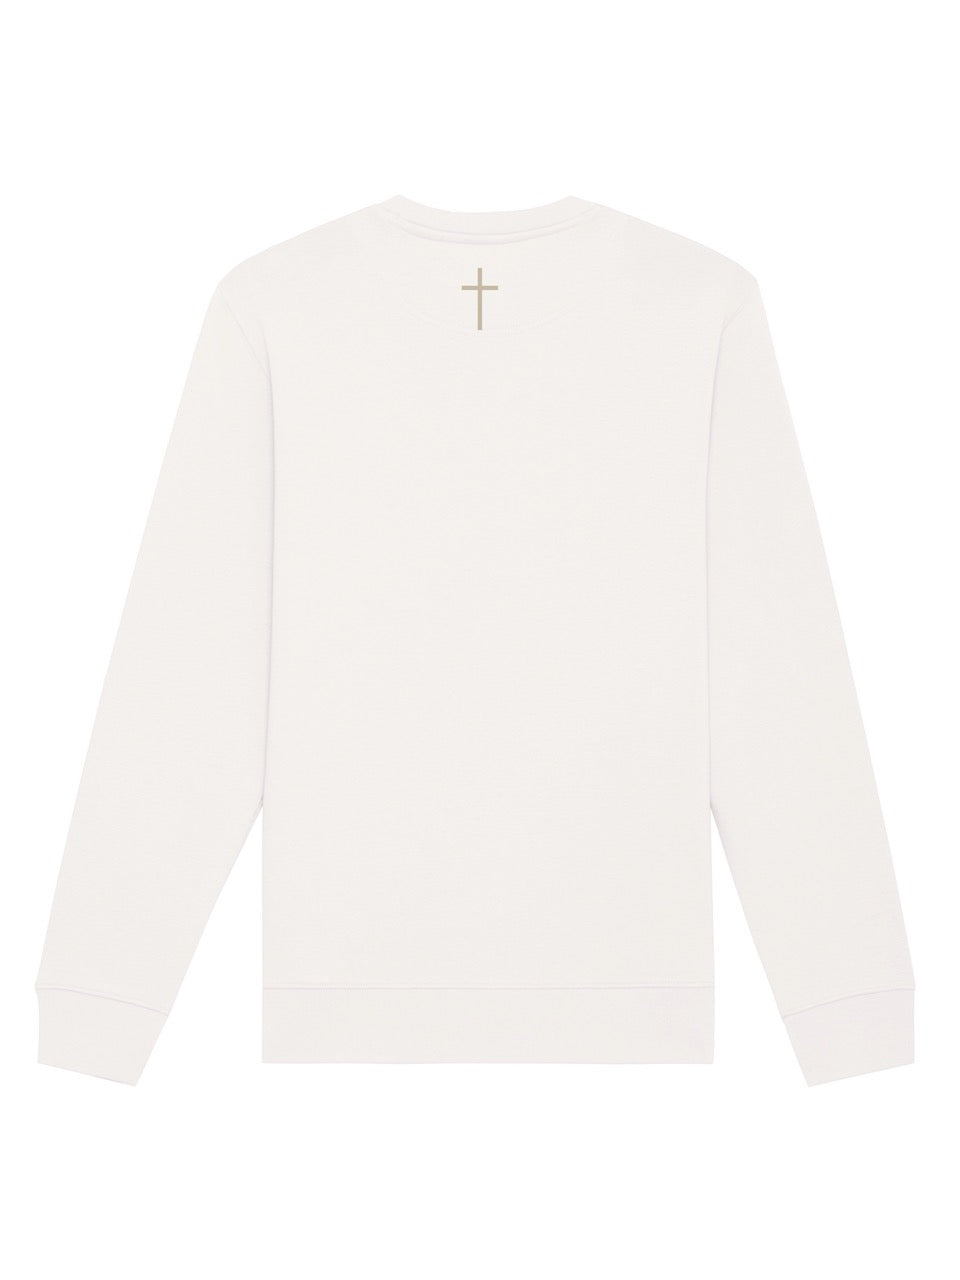 Sweatshirt - "Christ is risen"